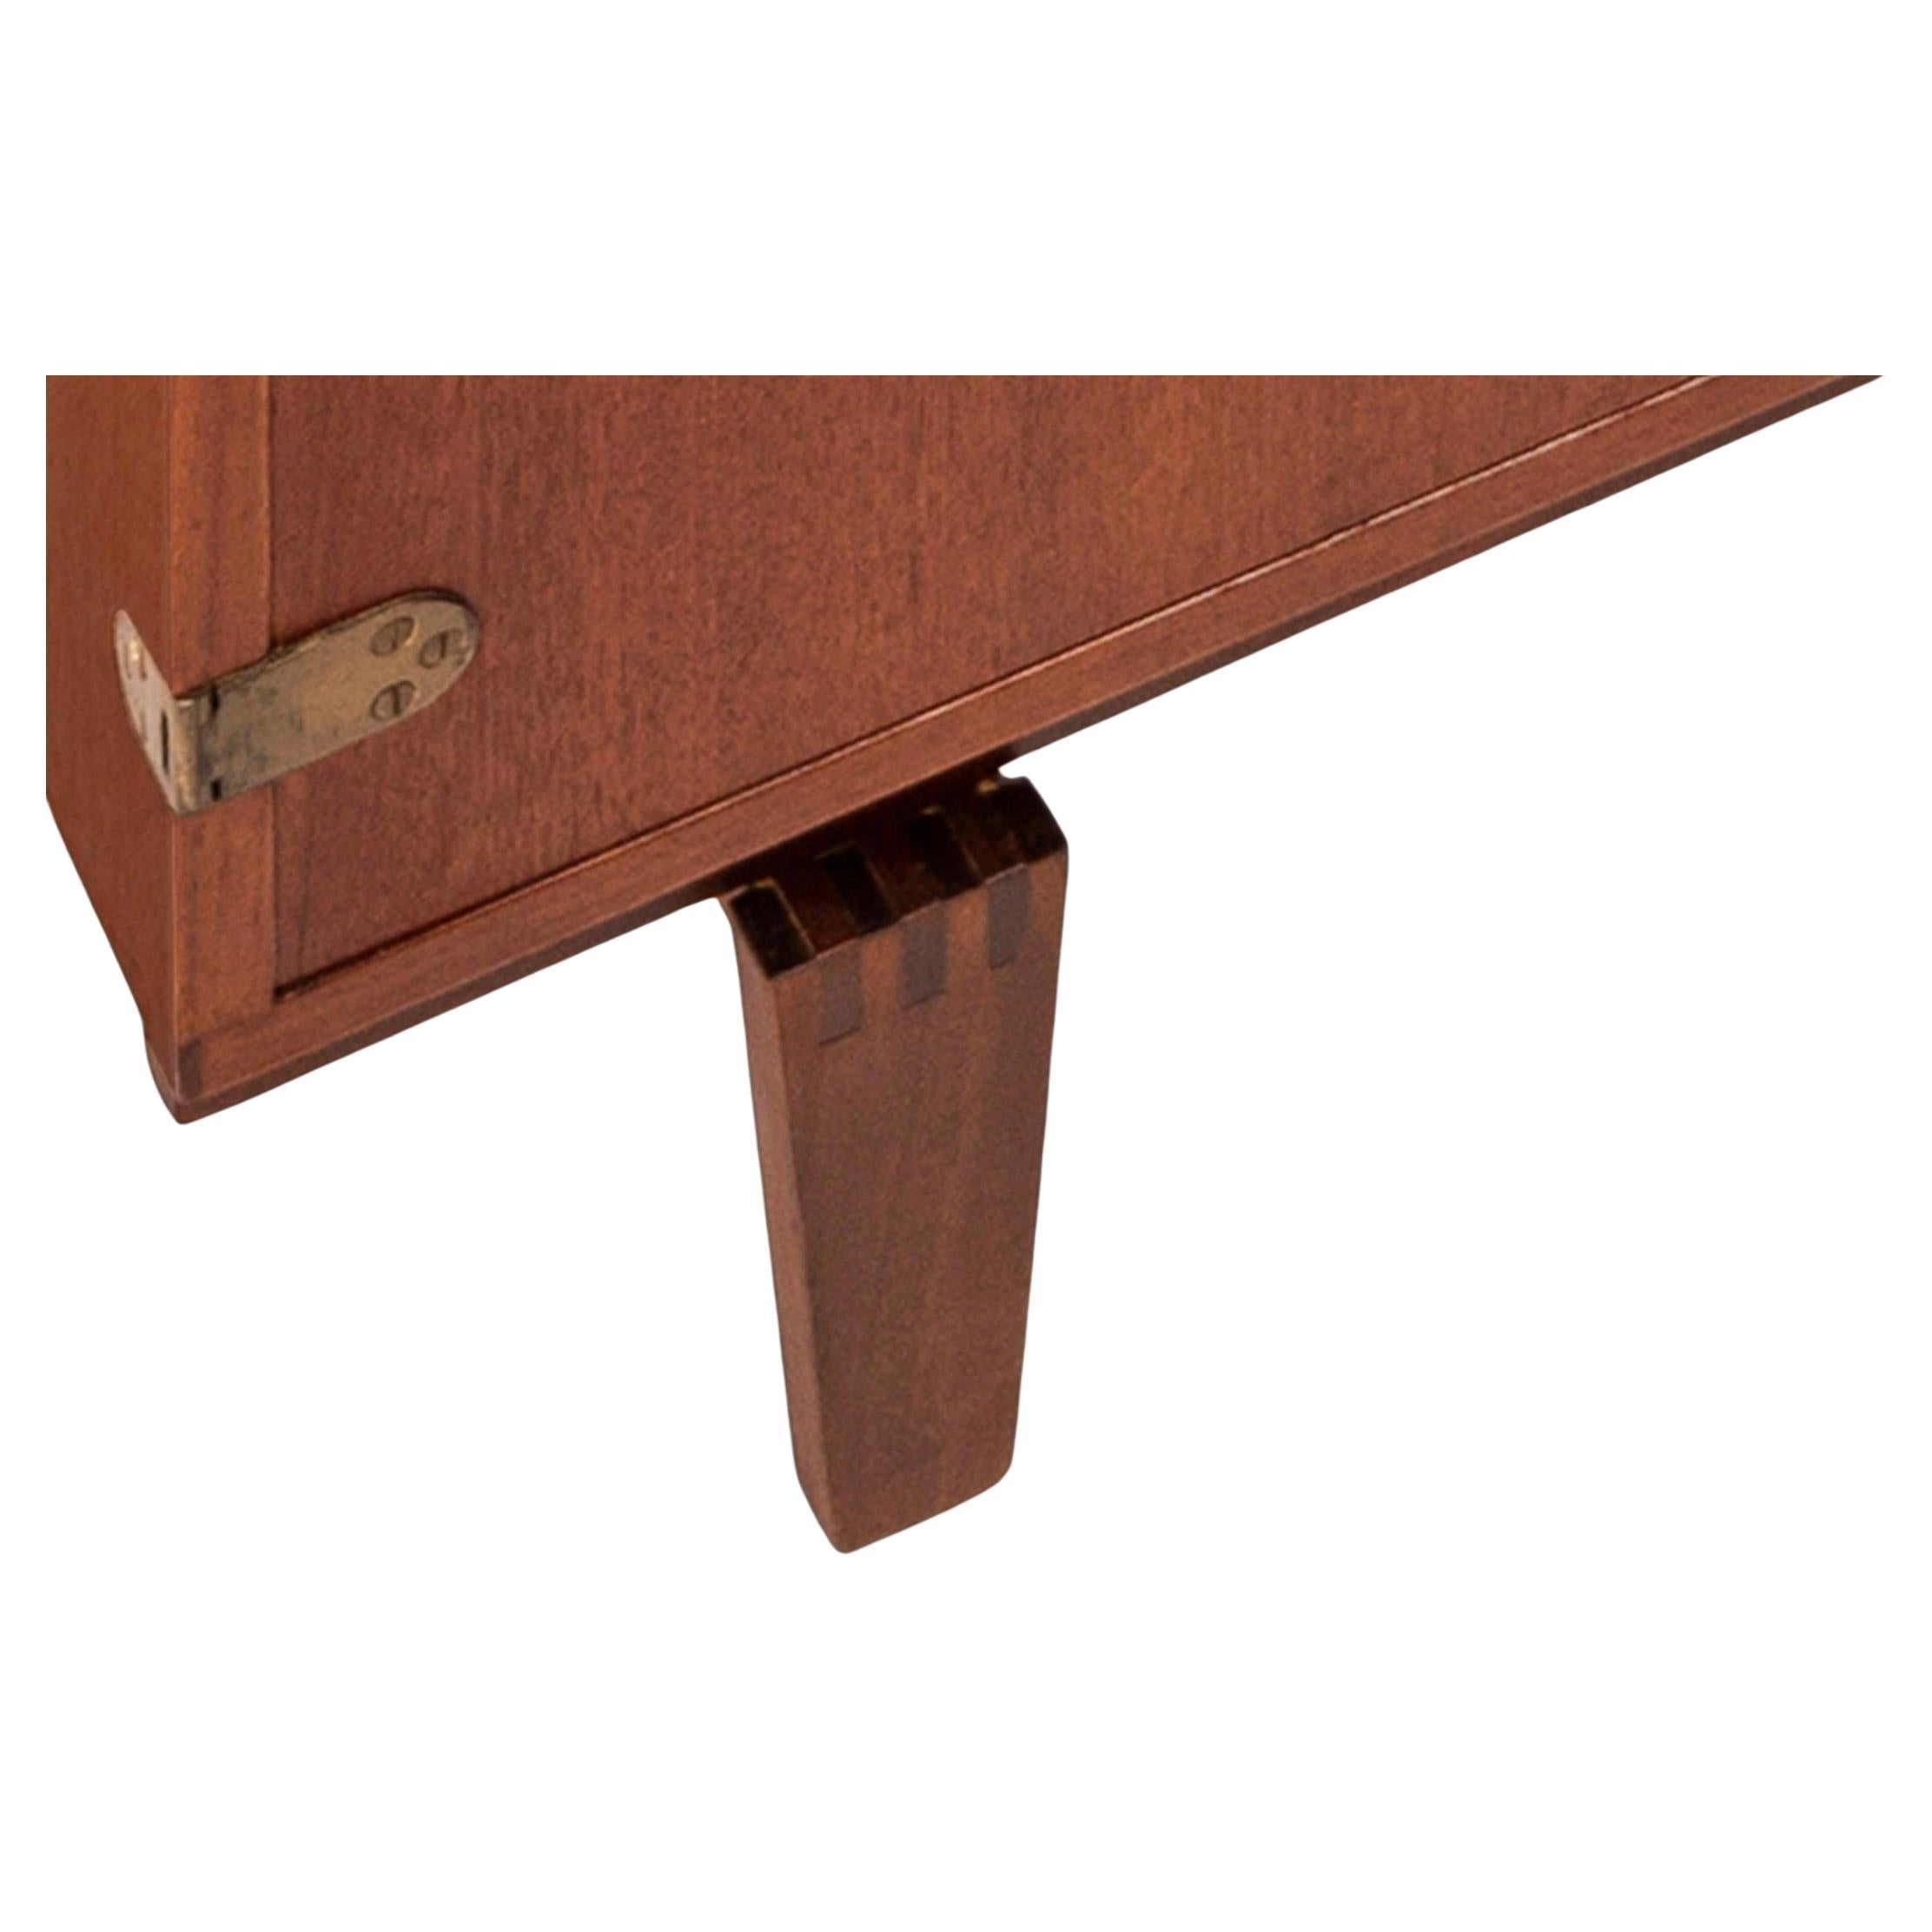 Woodwork Mid century danish modern credenza flip down desk bookcase shelf unit by Lovig For Sale